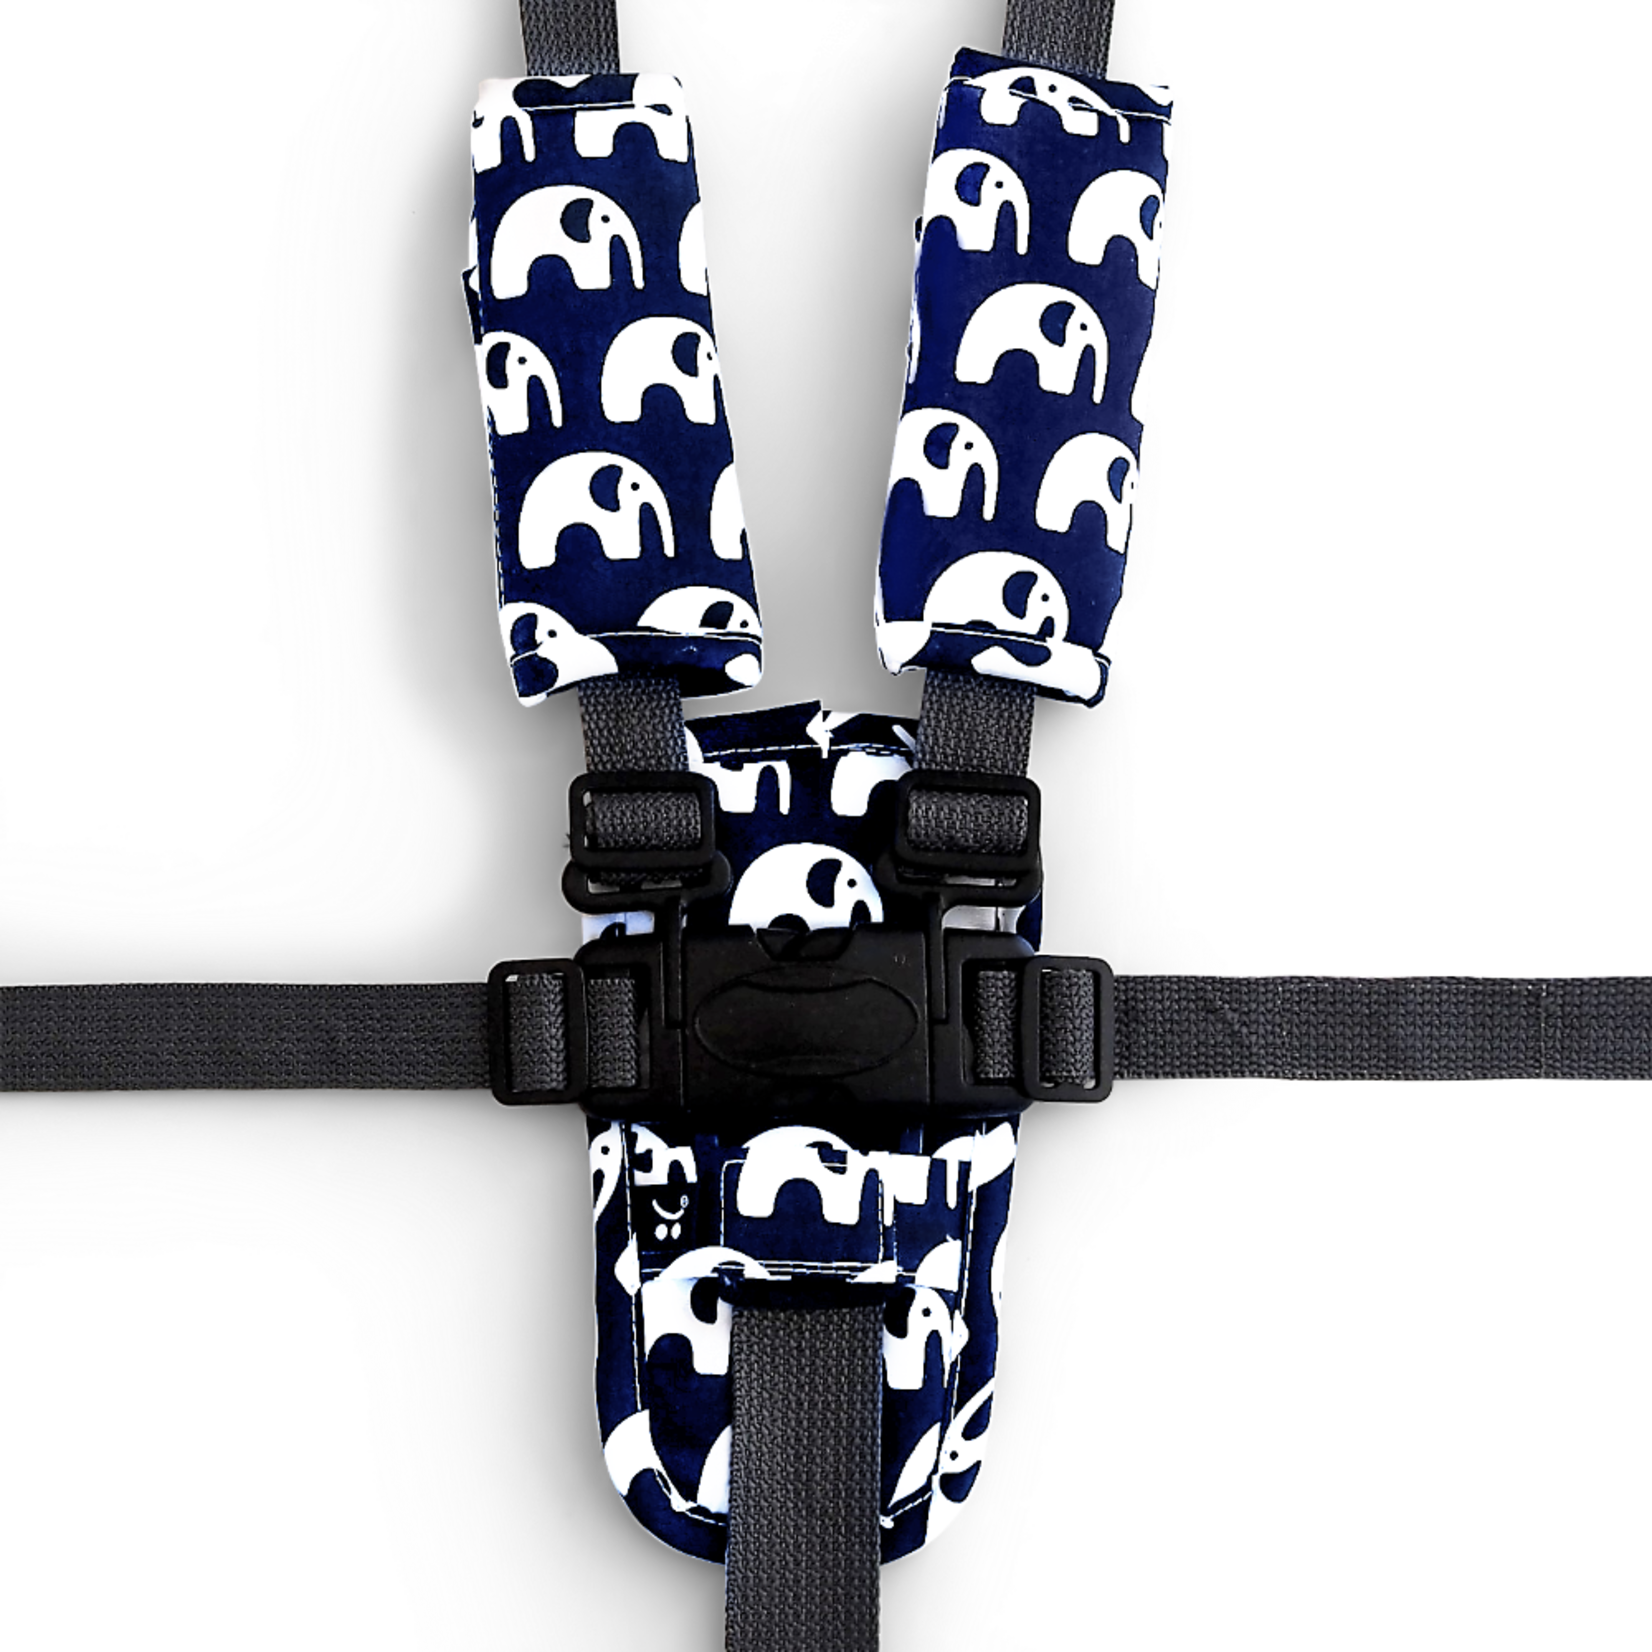 Outlookbaby 3 Piece Harness Cover Set - Navy Elephants